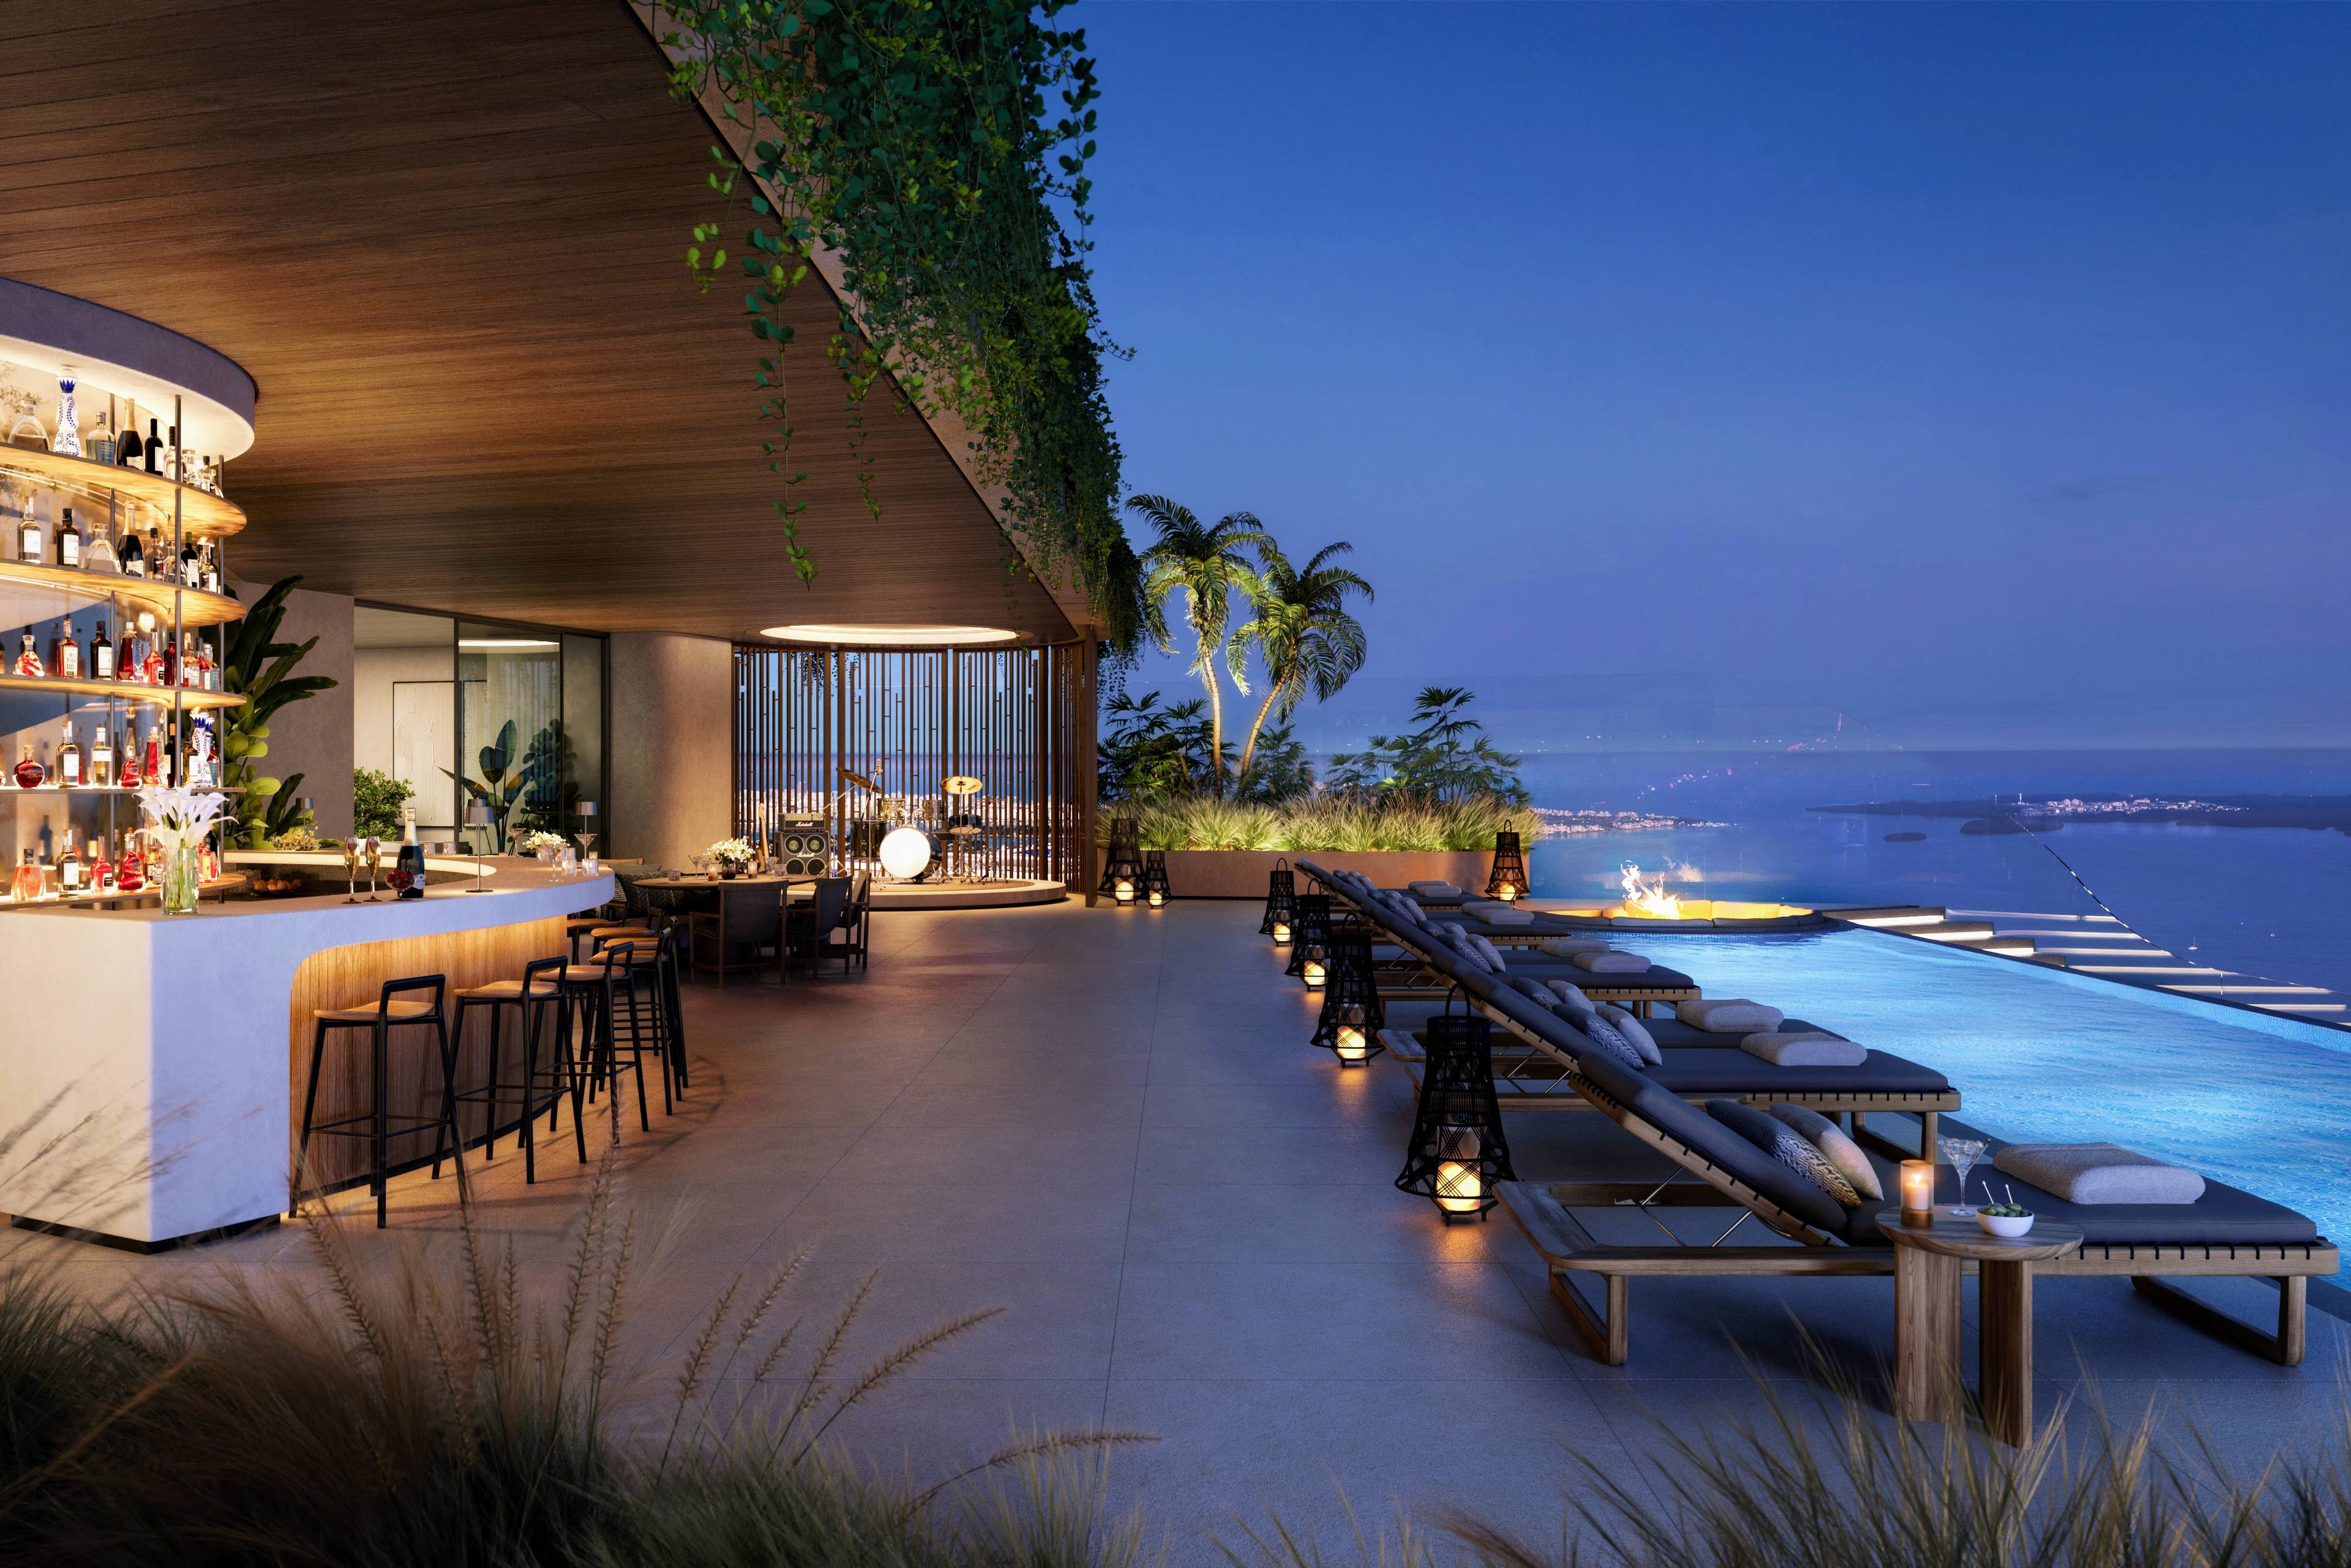 Miami's Perfect Luxury Haven: 2 BR + Den, 3.5 BA, 2,616 sqft + 590 sqft Wraparound Terrace